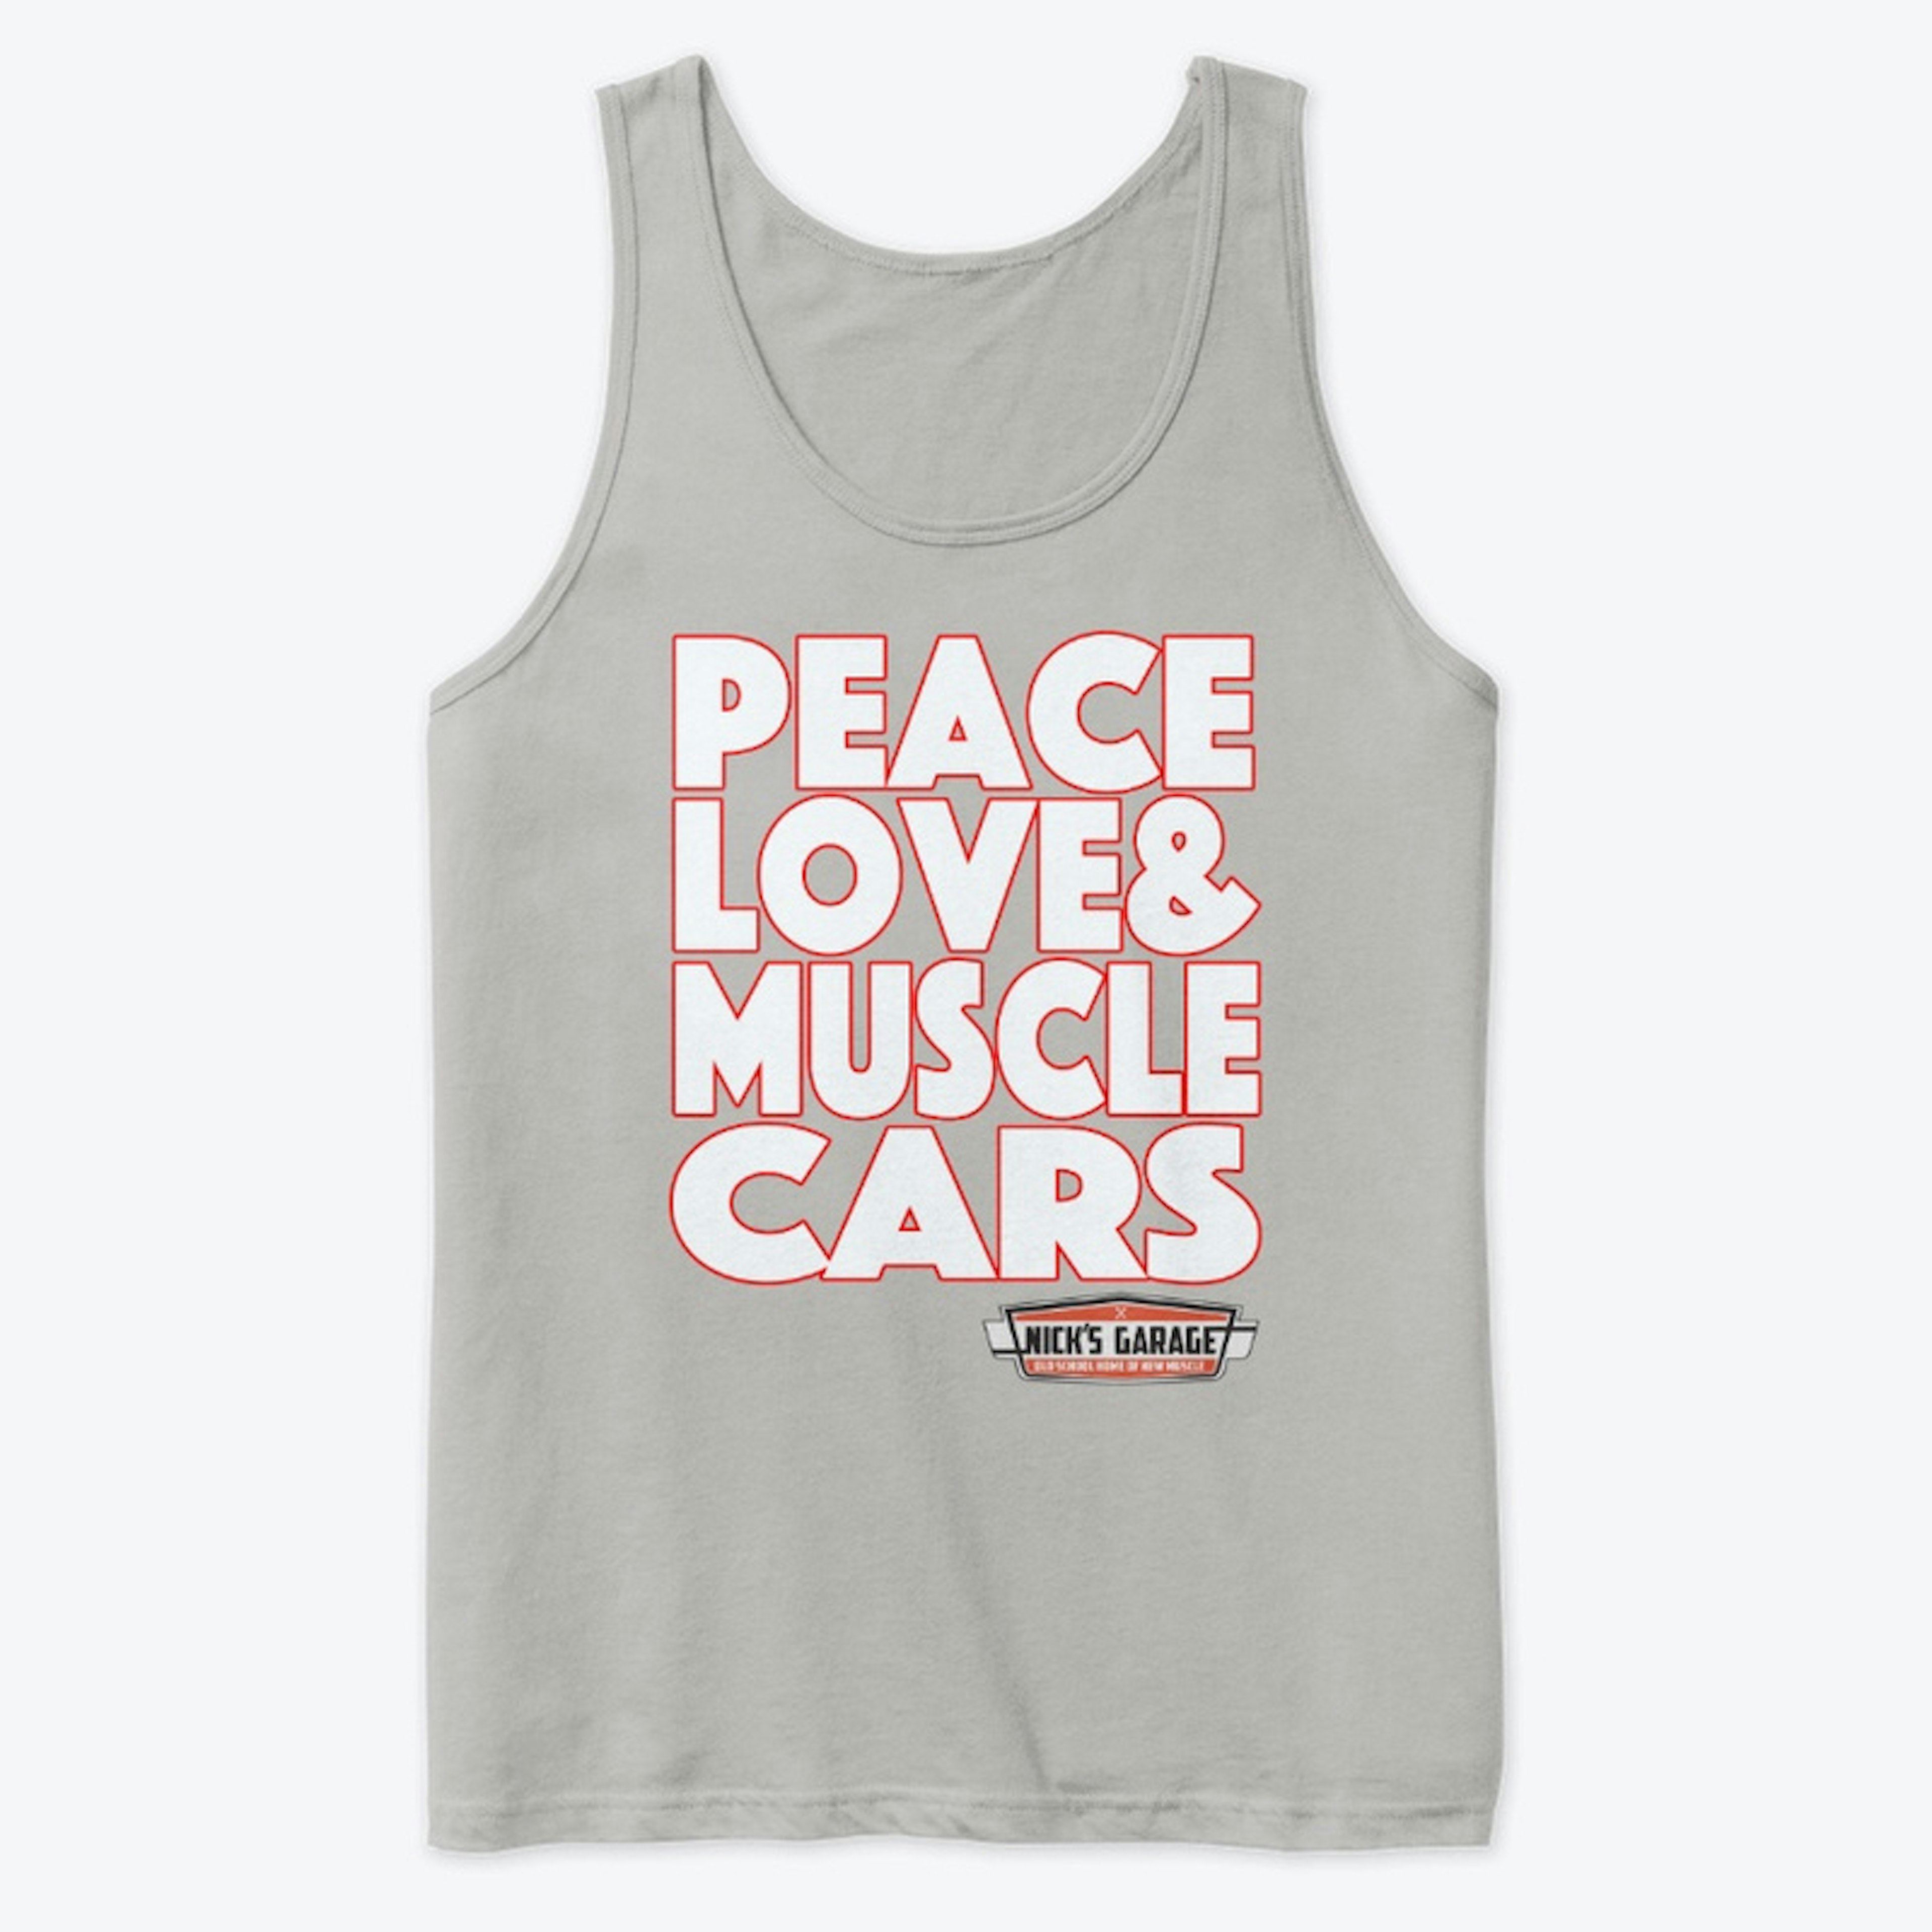 Peace Love & Muscle Cars